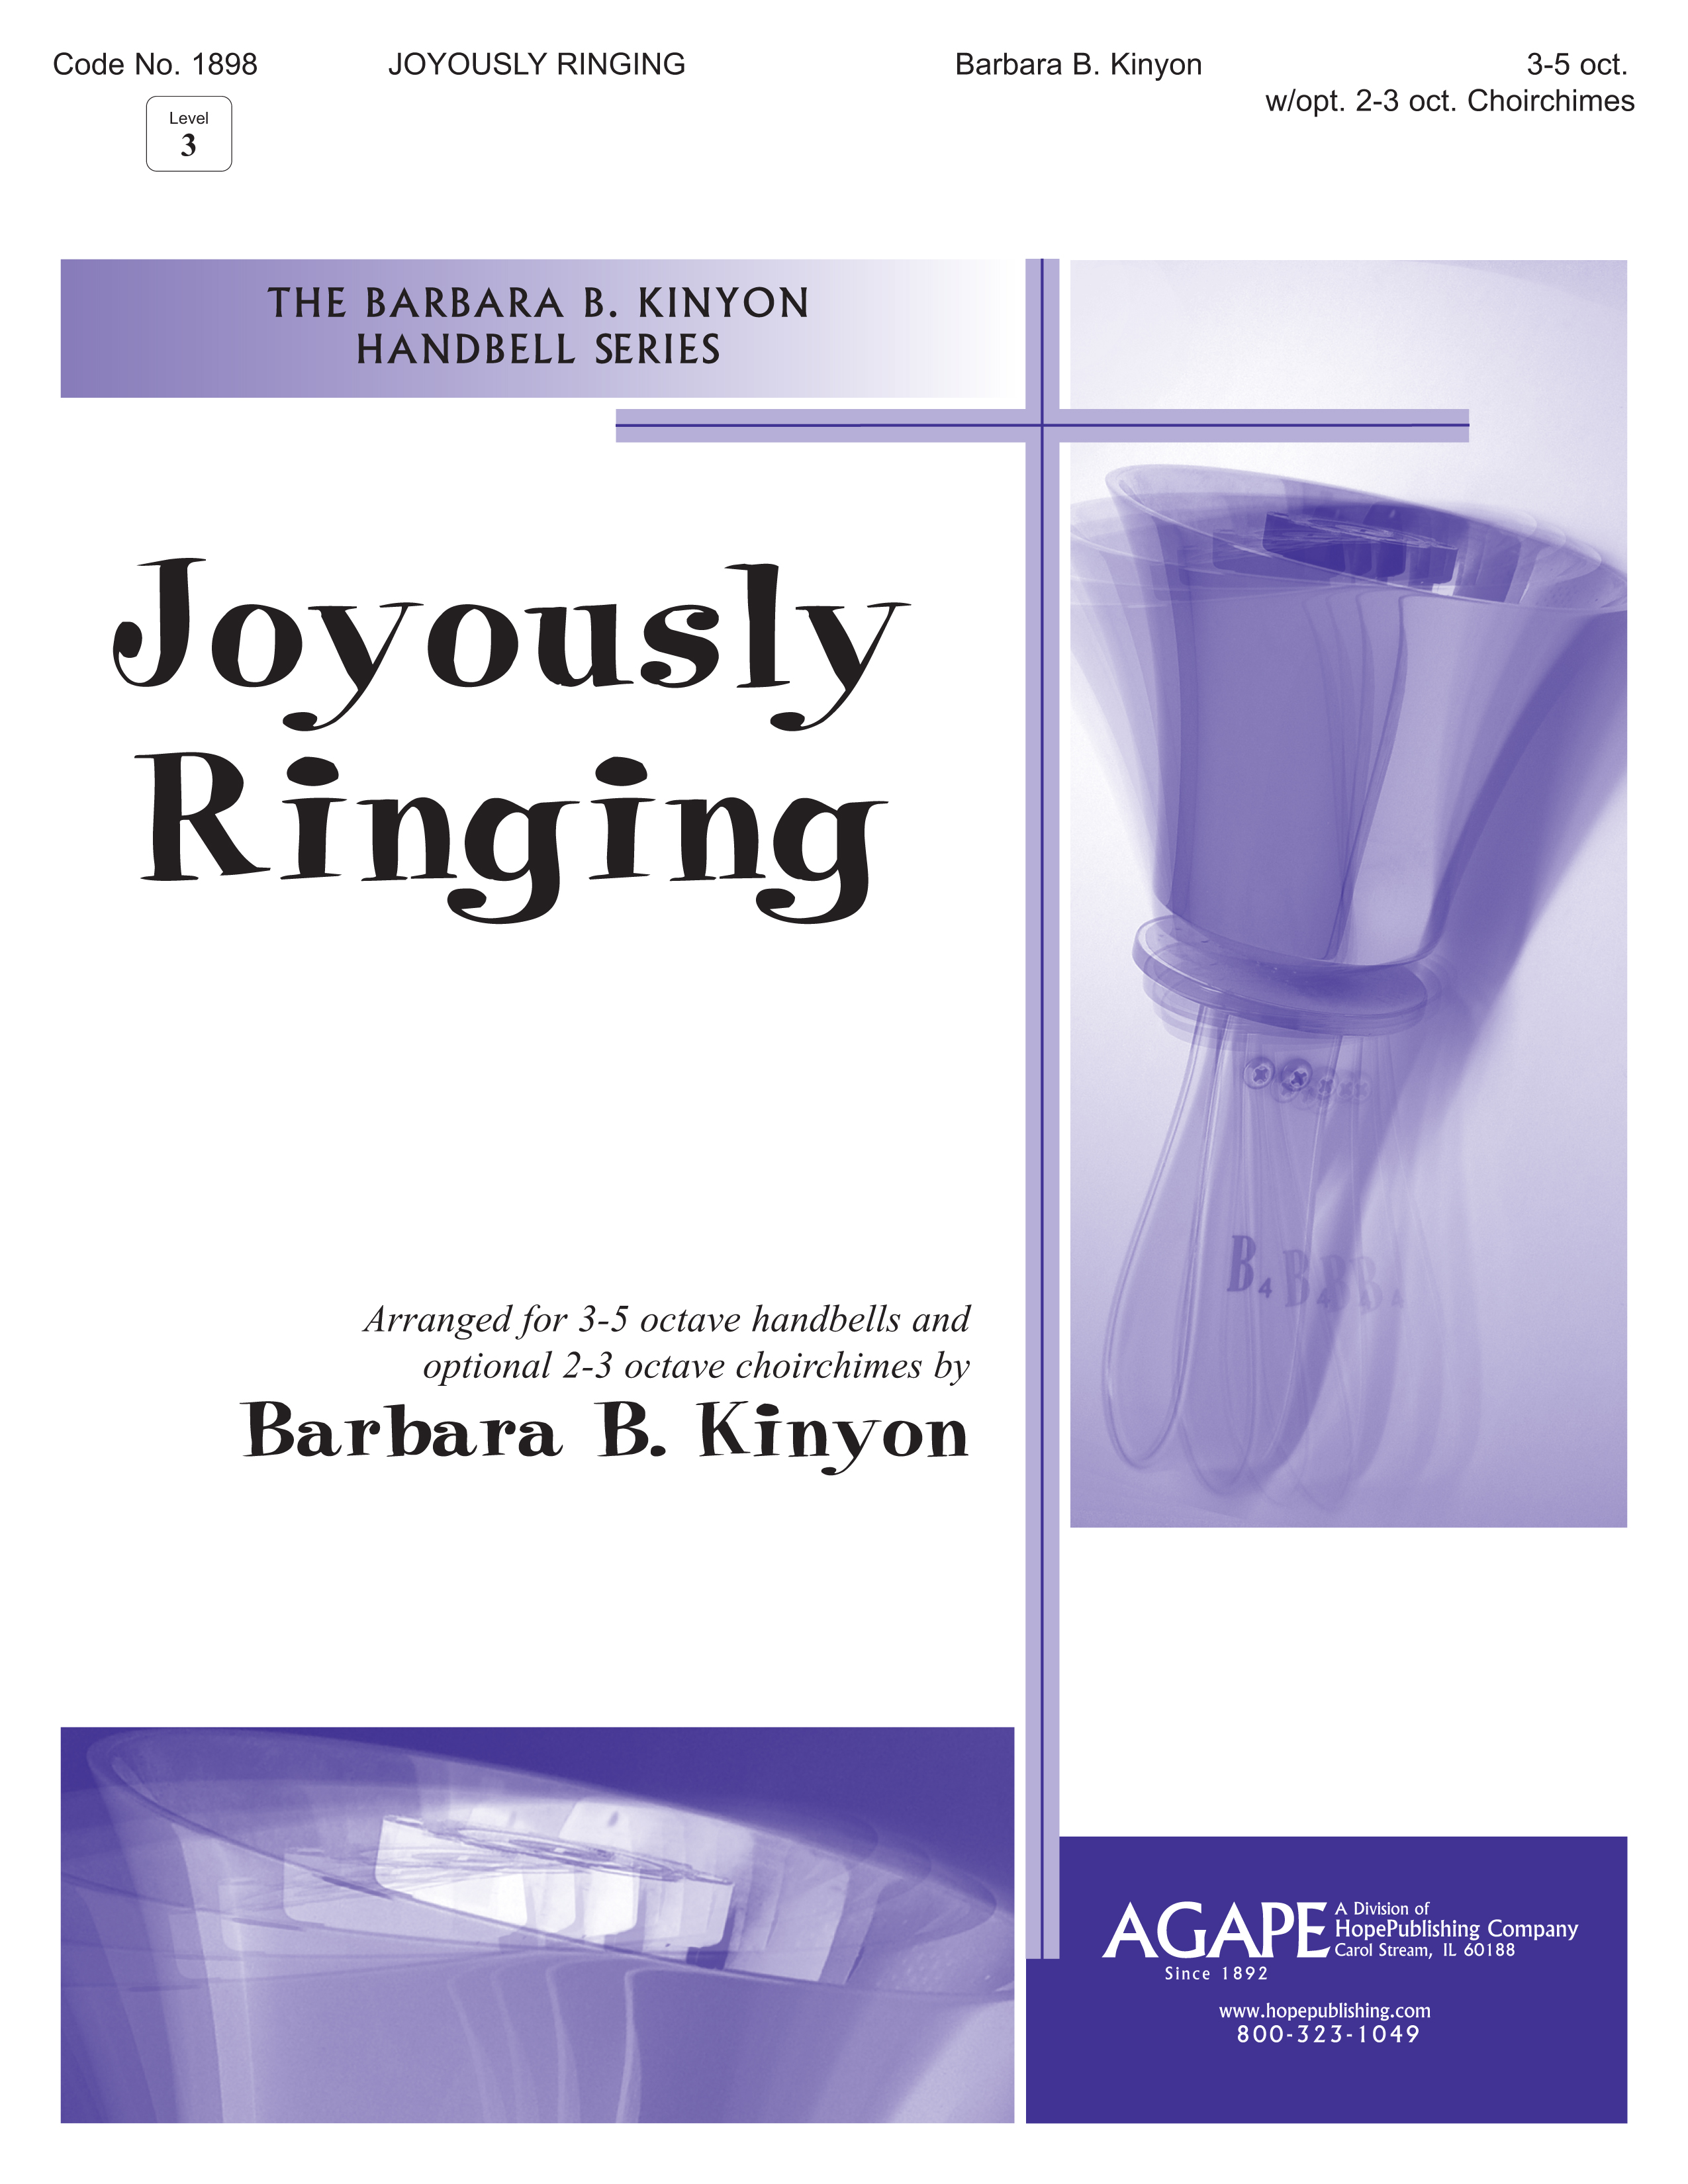 Joyously Ringing - 3-5 oct. w-opt. 2-3 oct. handchimes Cover Image